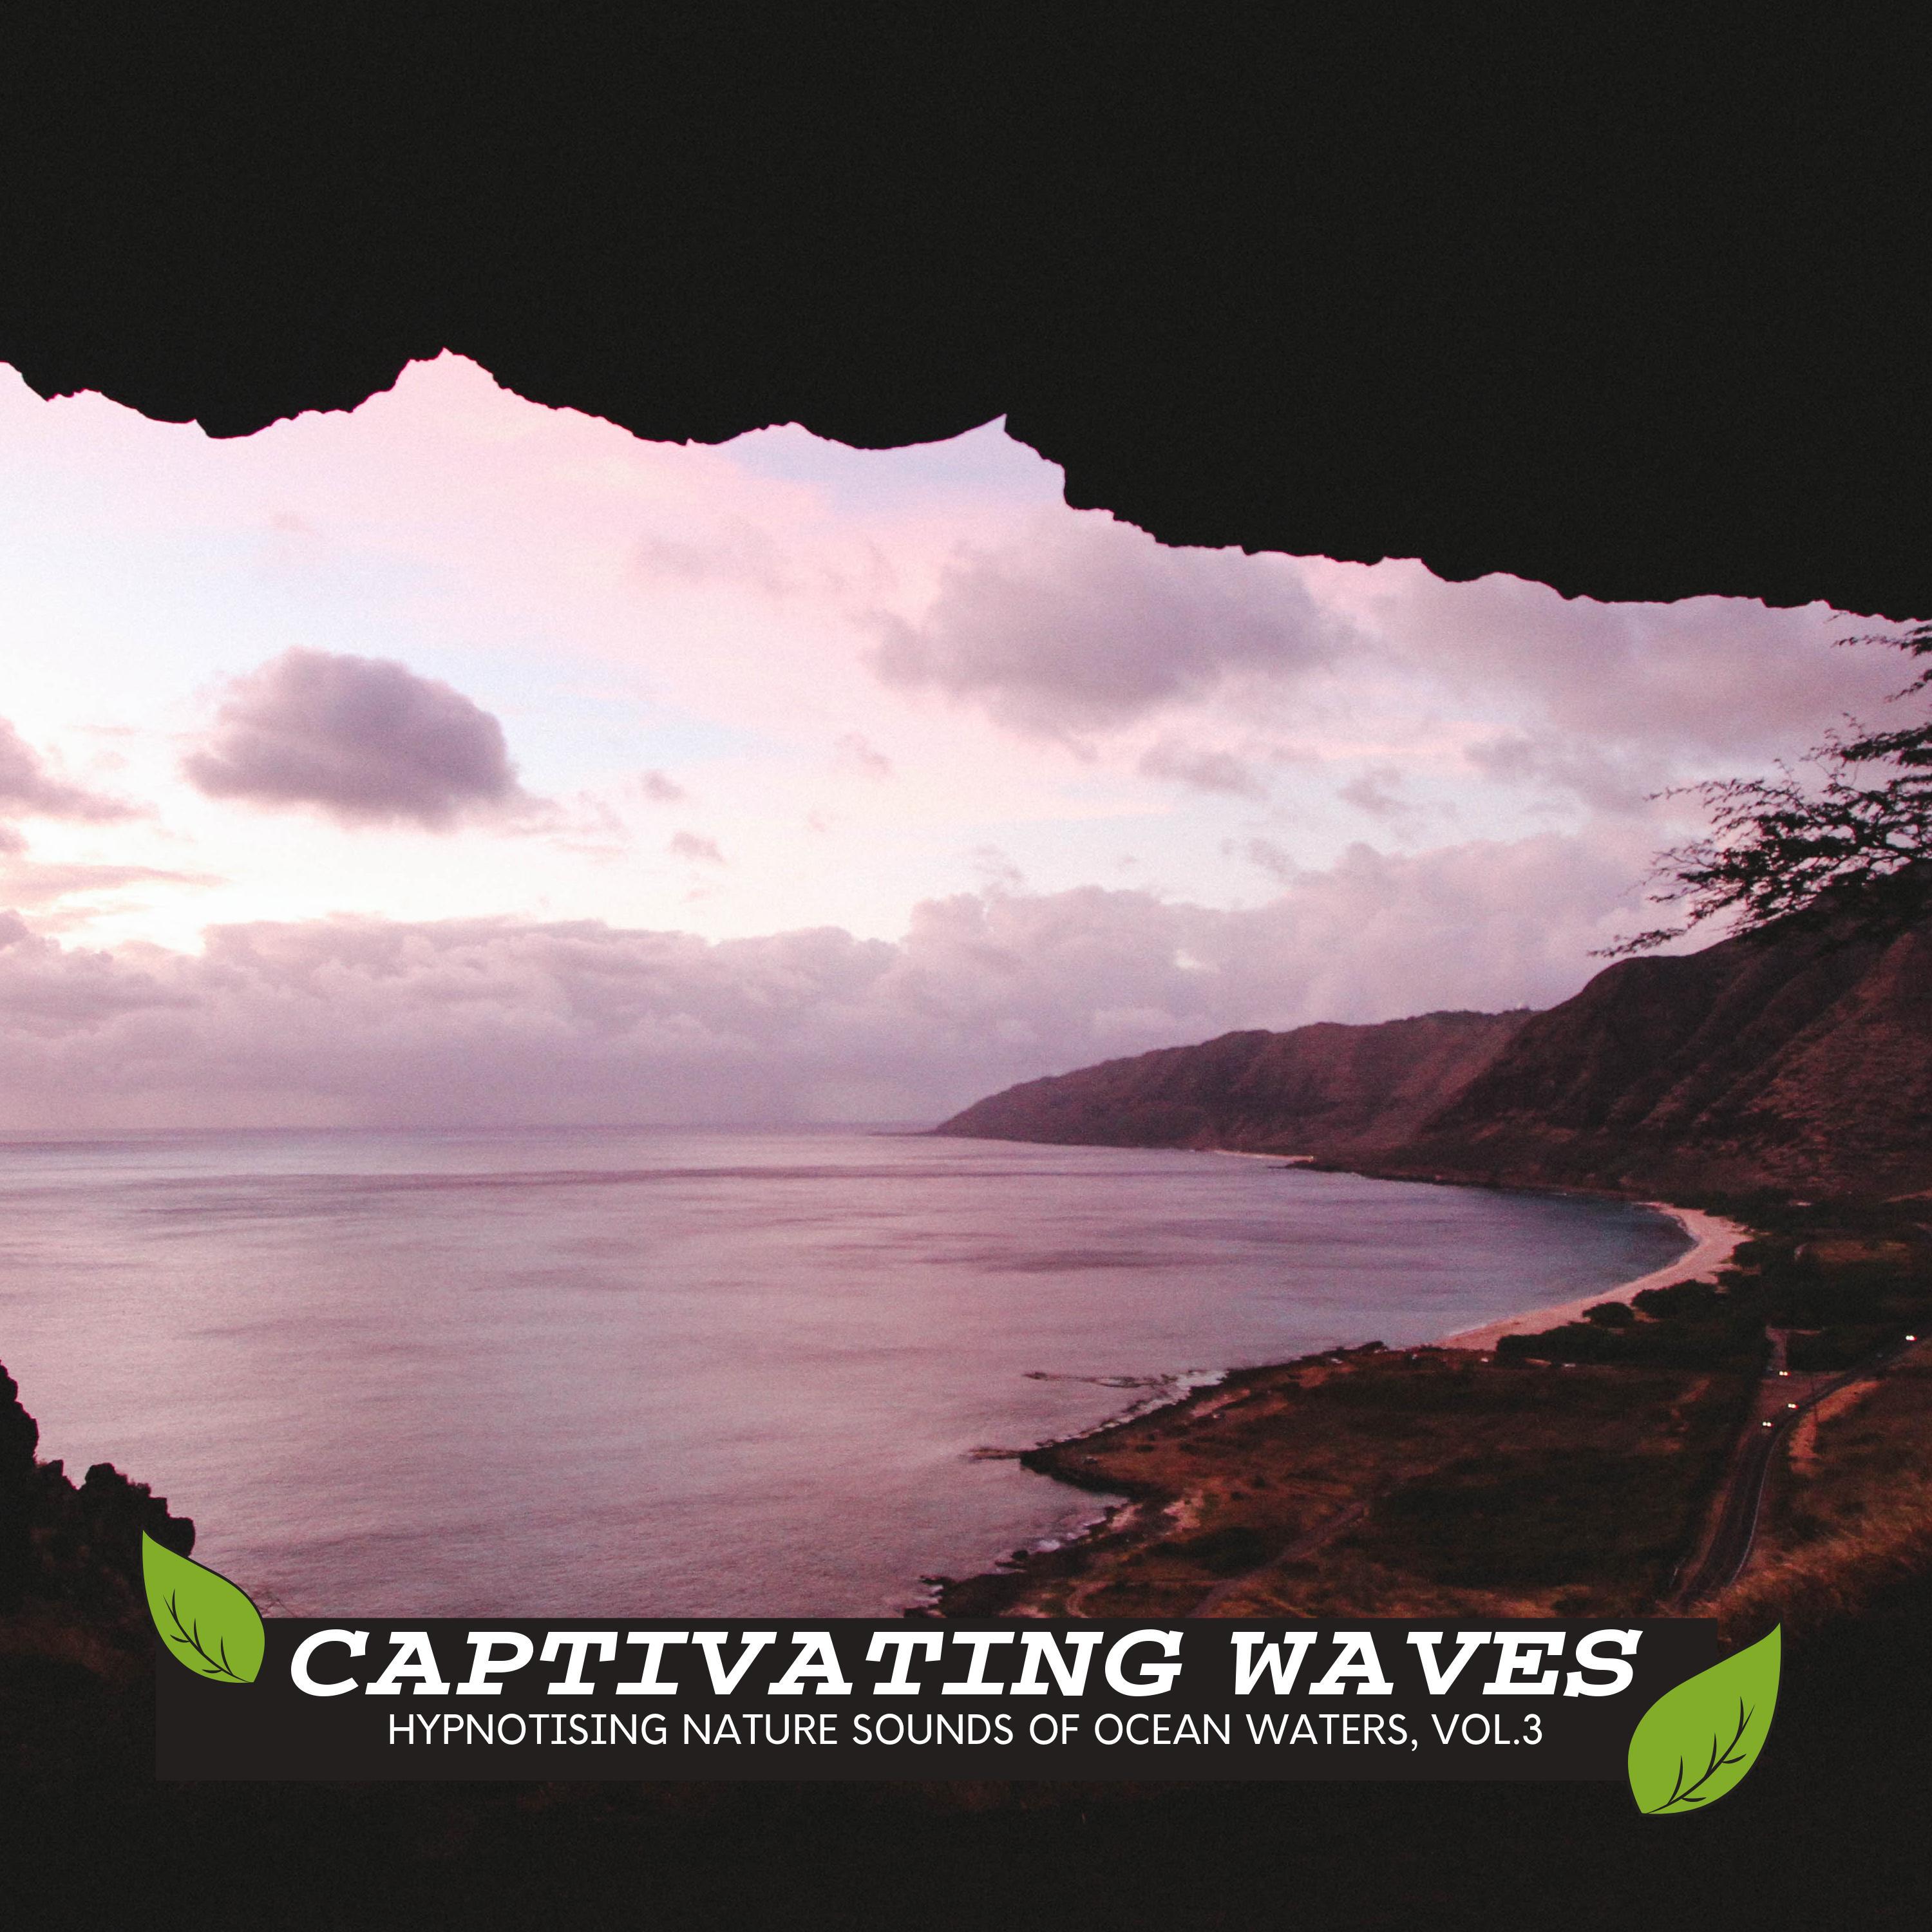 Gossamer Waves Oceanic Music - Easygoing Waves Harmony